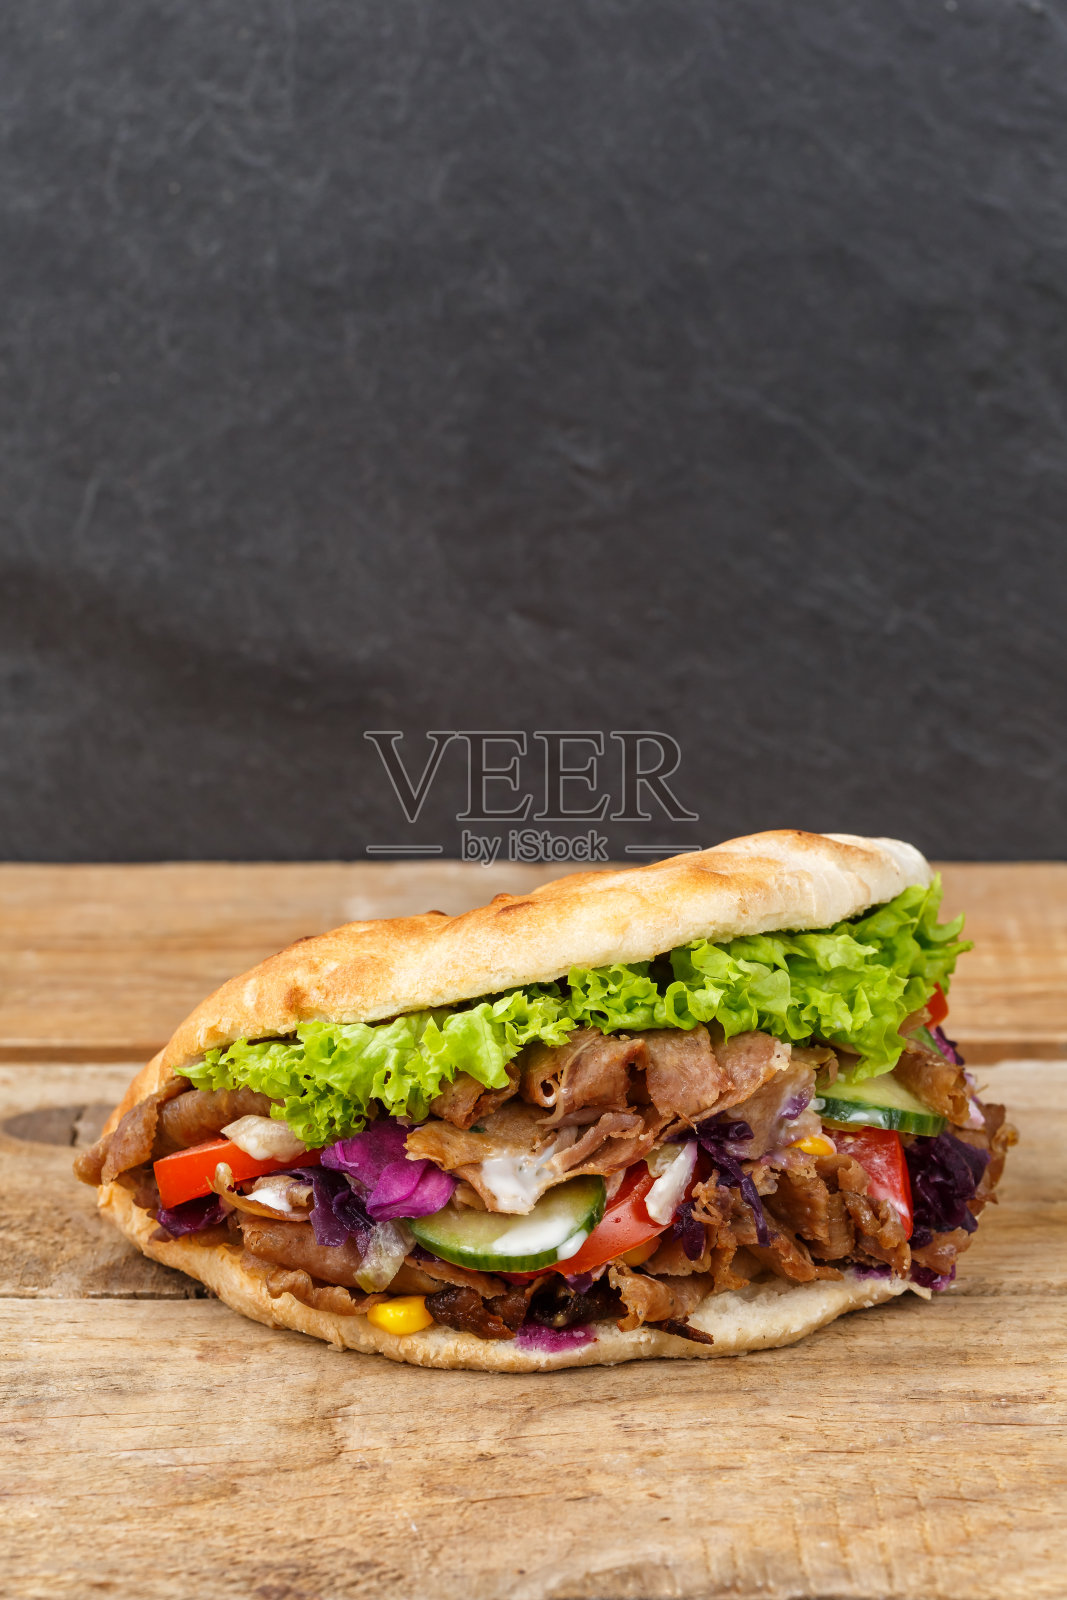 Döner Kebab Doner在木板肖像格式的扁面包上的Kebab快餐照片摄影图片